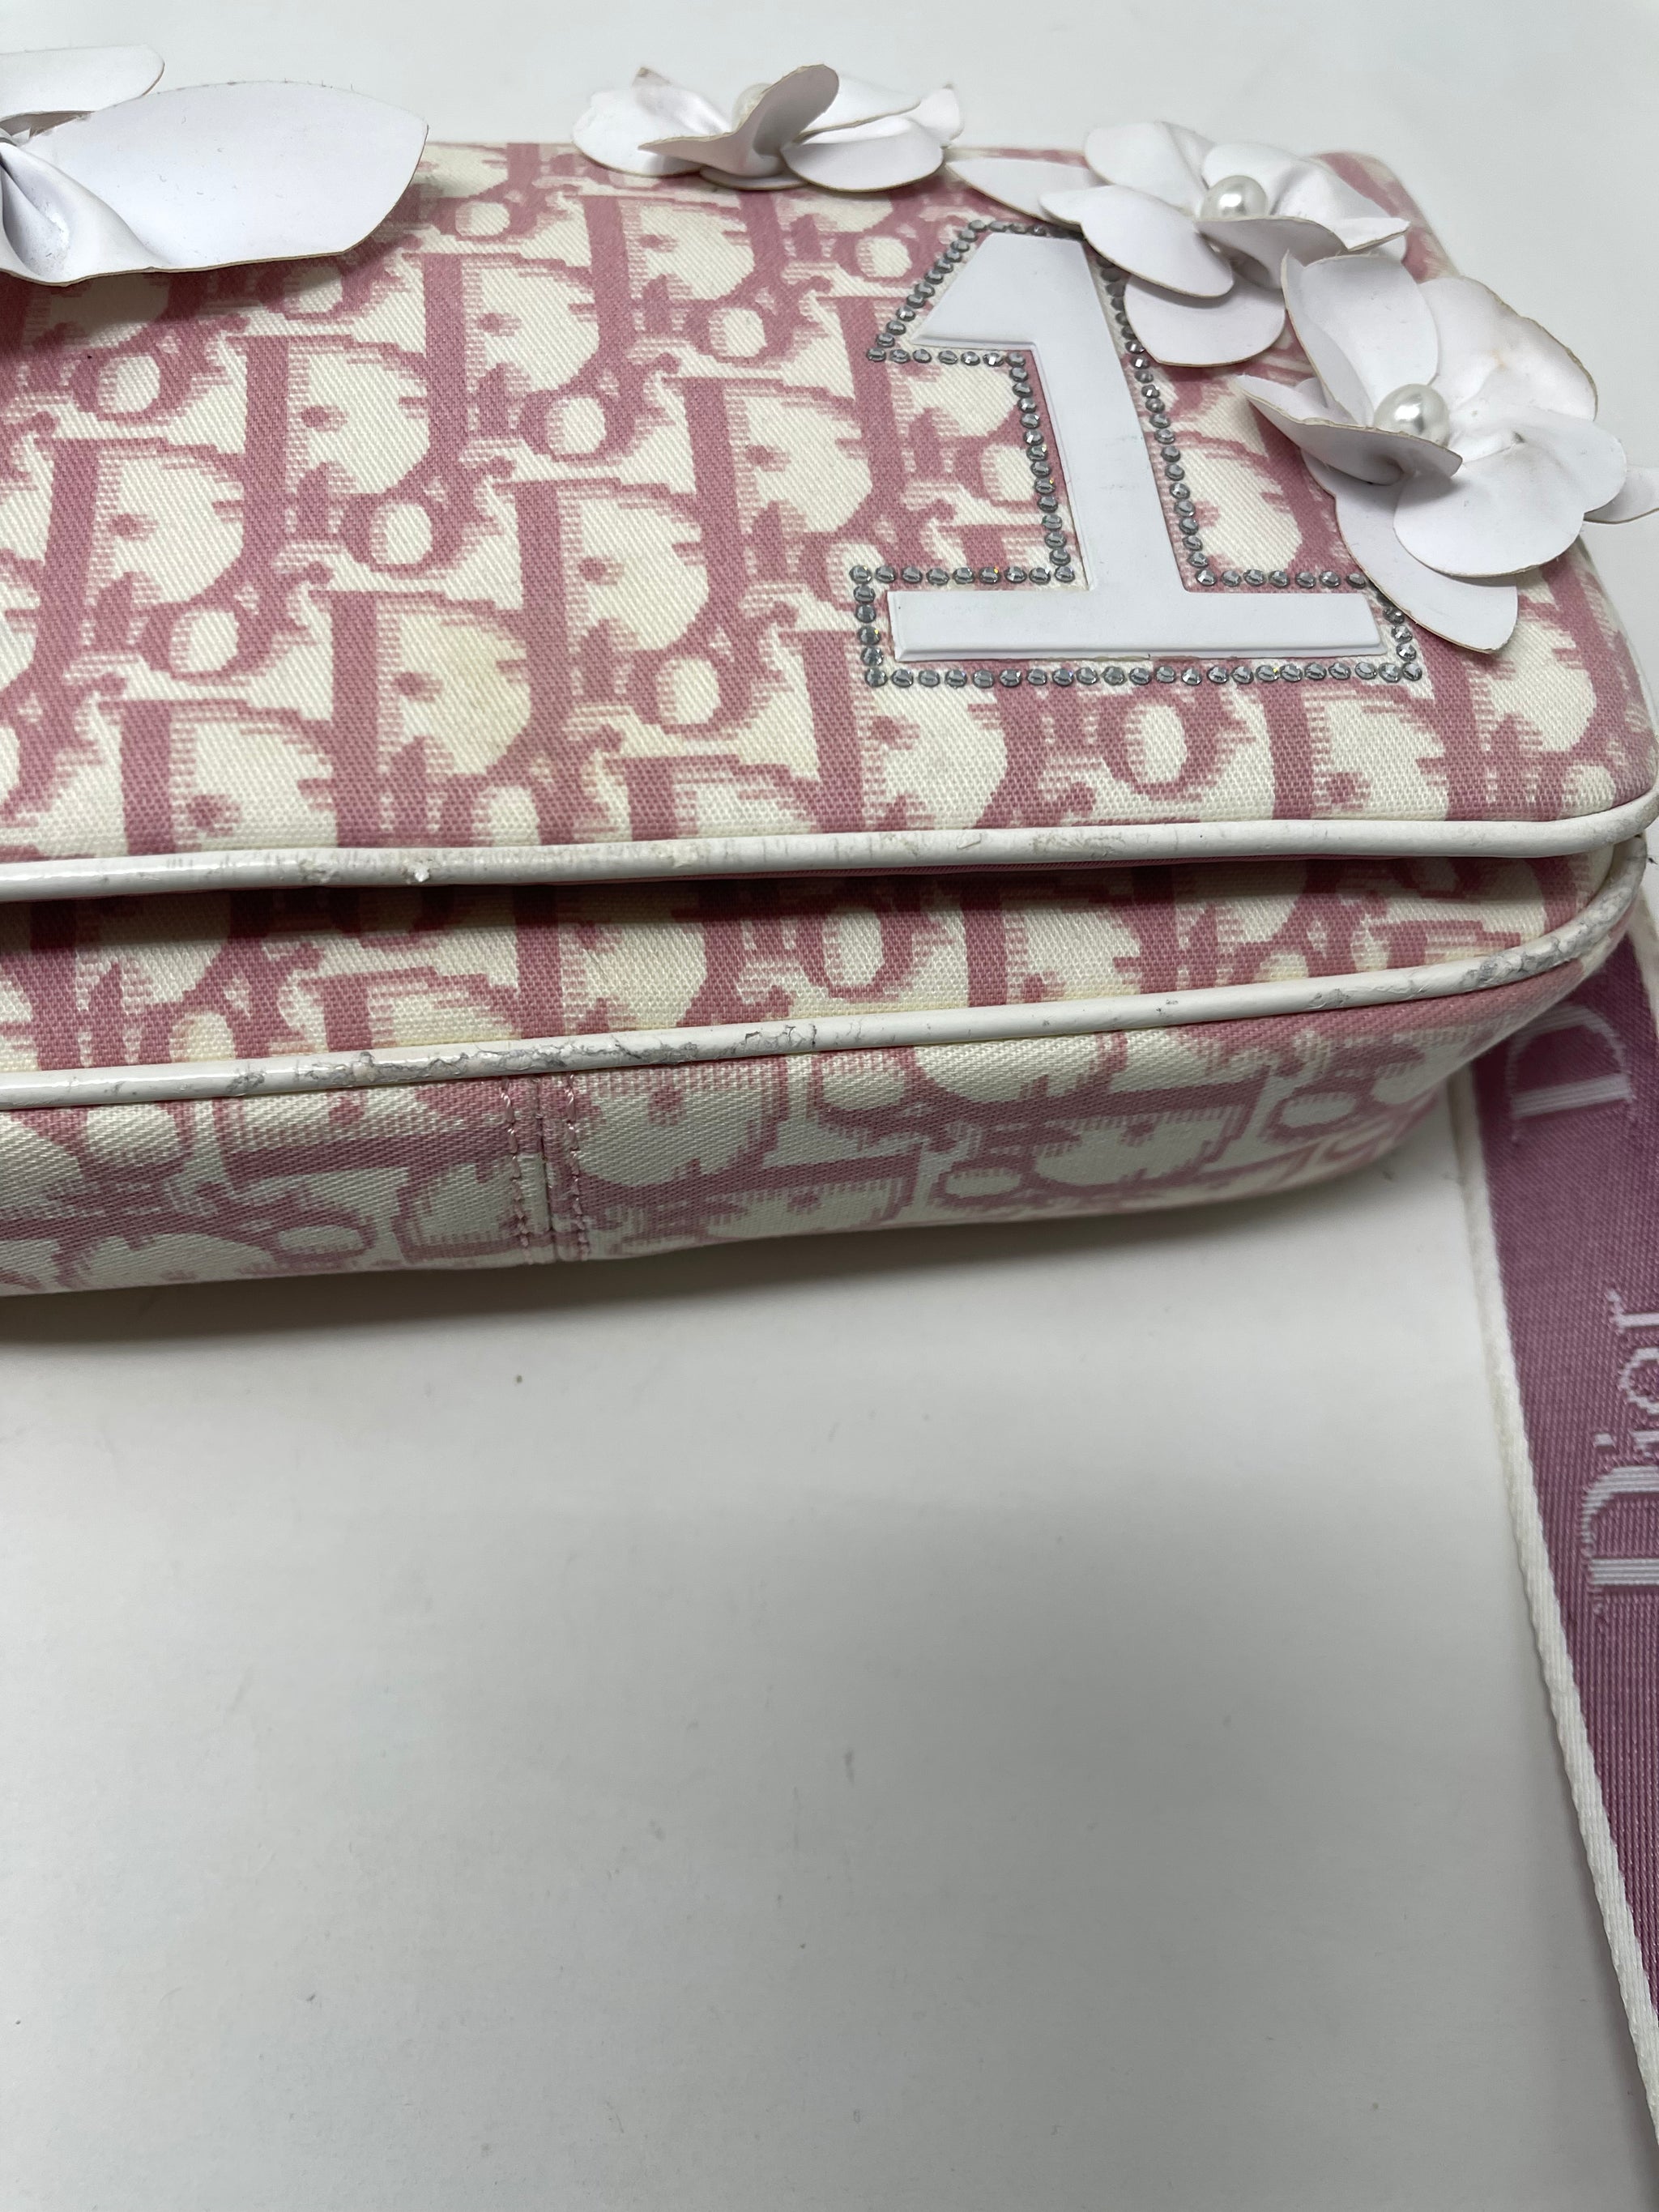 Christian Dior Pink Floral Trotter Oblique Crossbody Bag! - New Neu Glamour